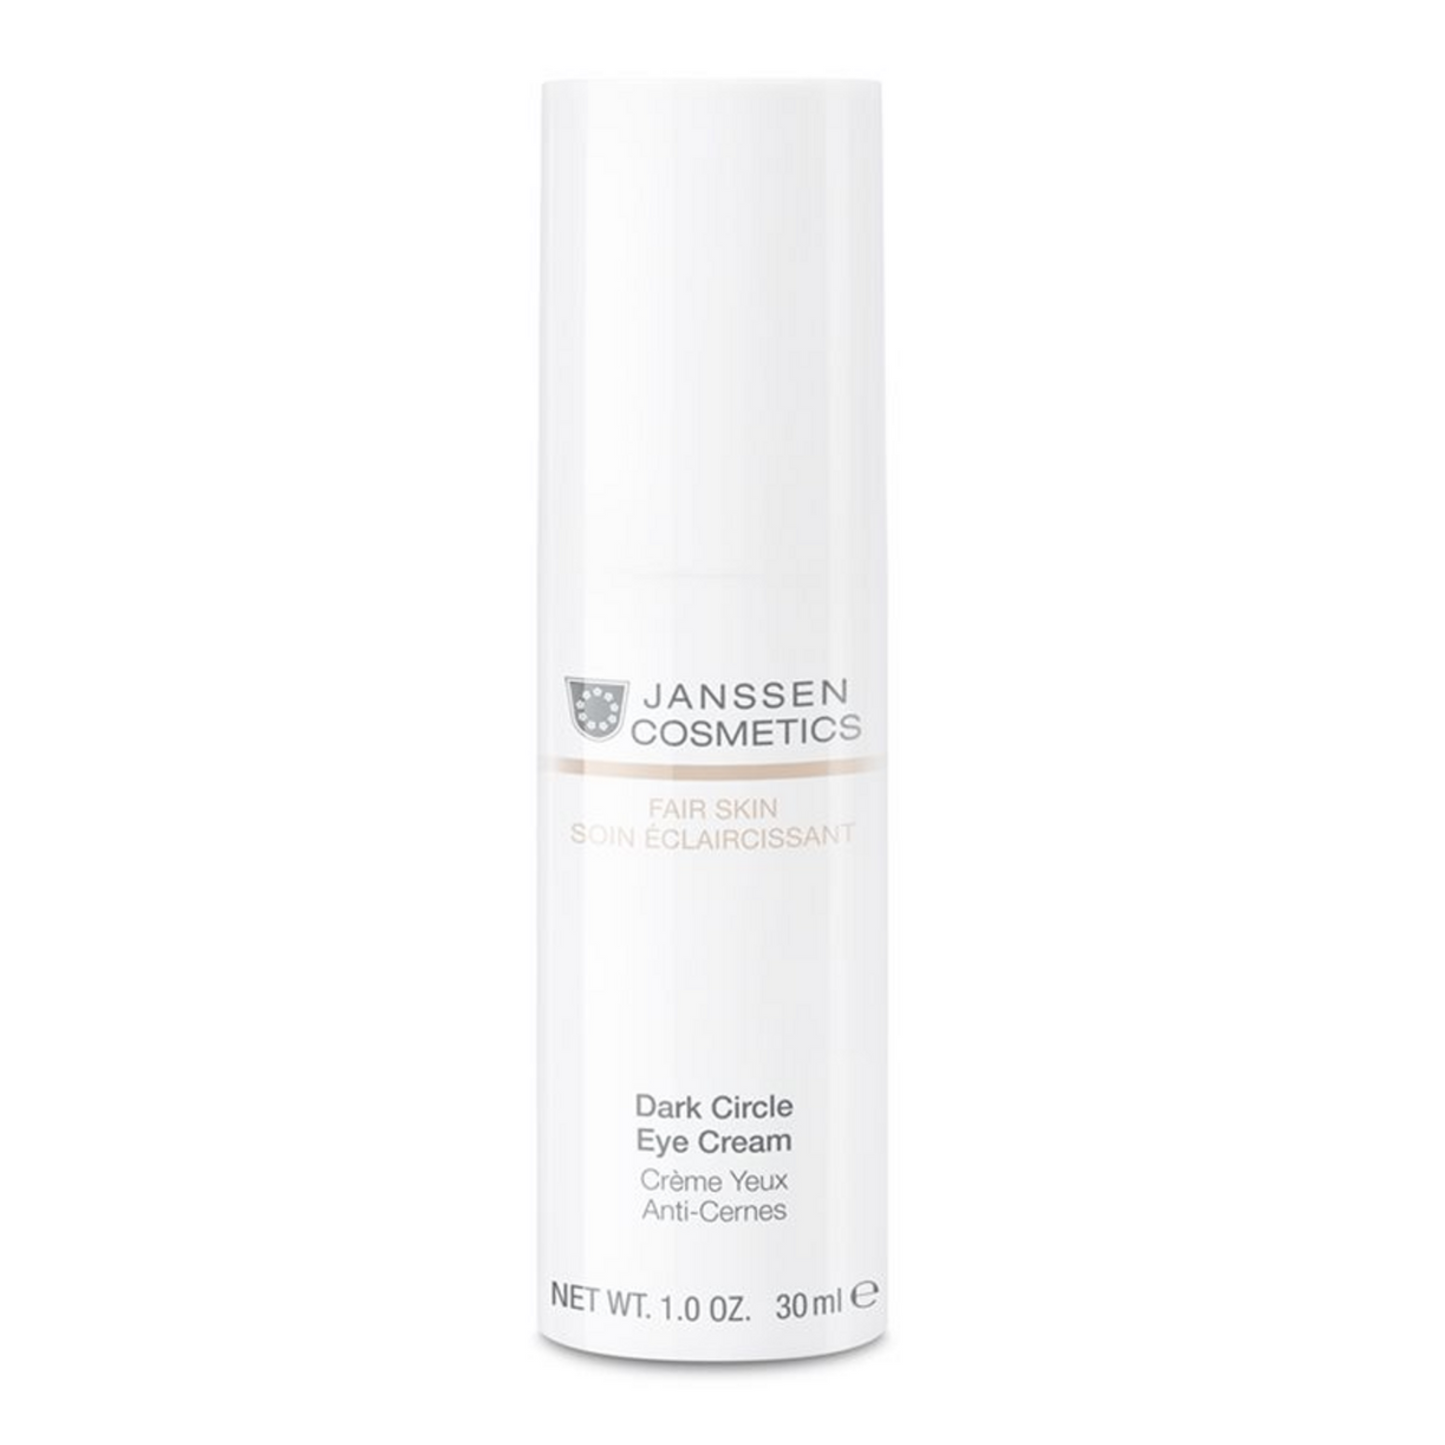 Janssen Cosmetics Dark Circle Eye Cream